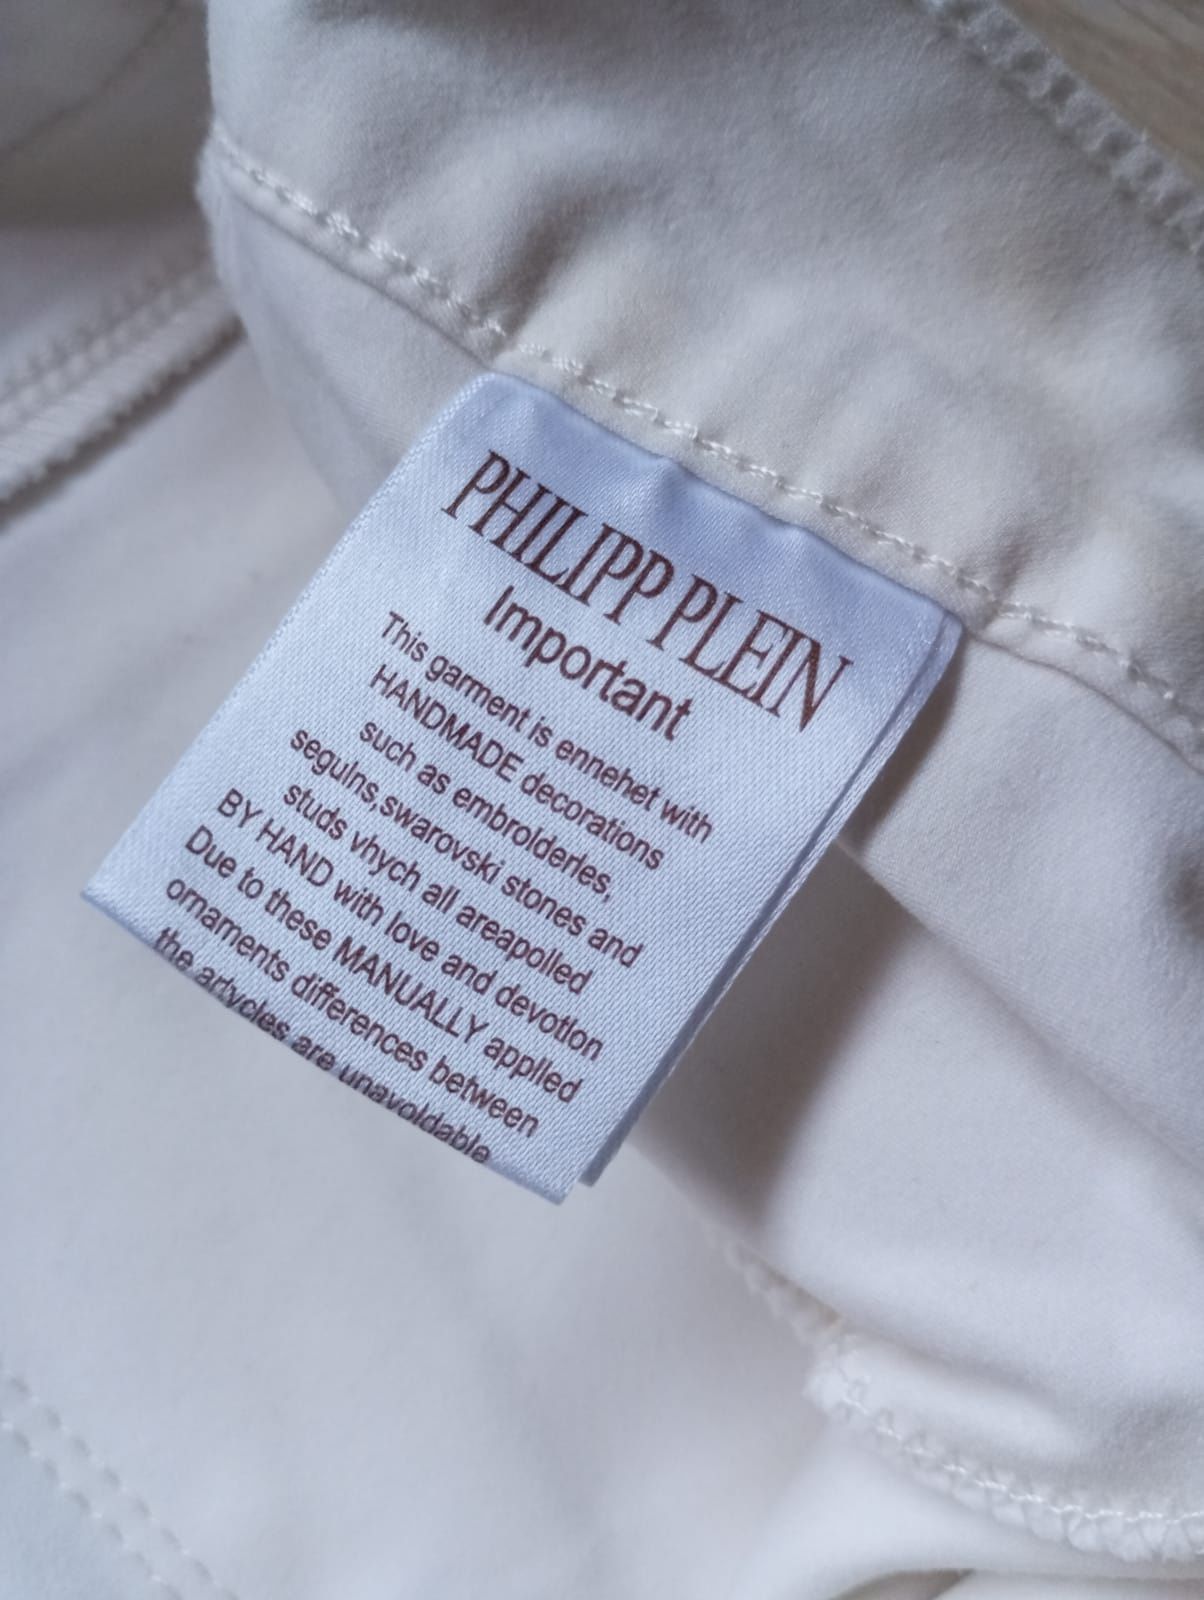 Philipp plein luxury spodnie handmade